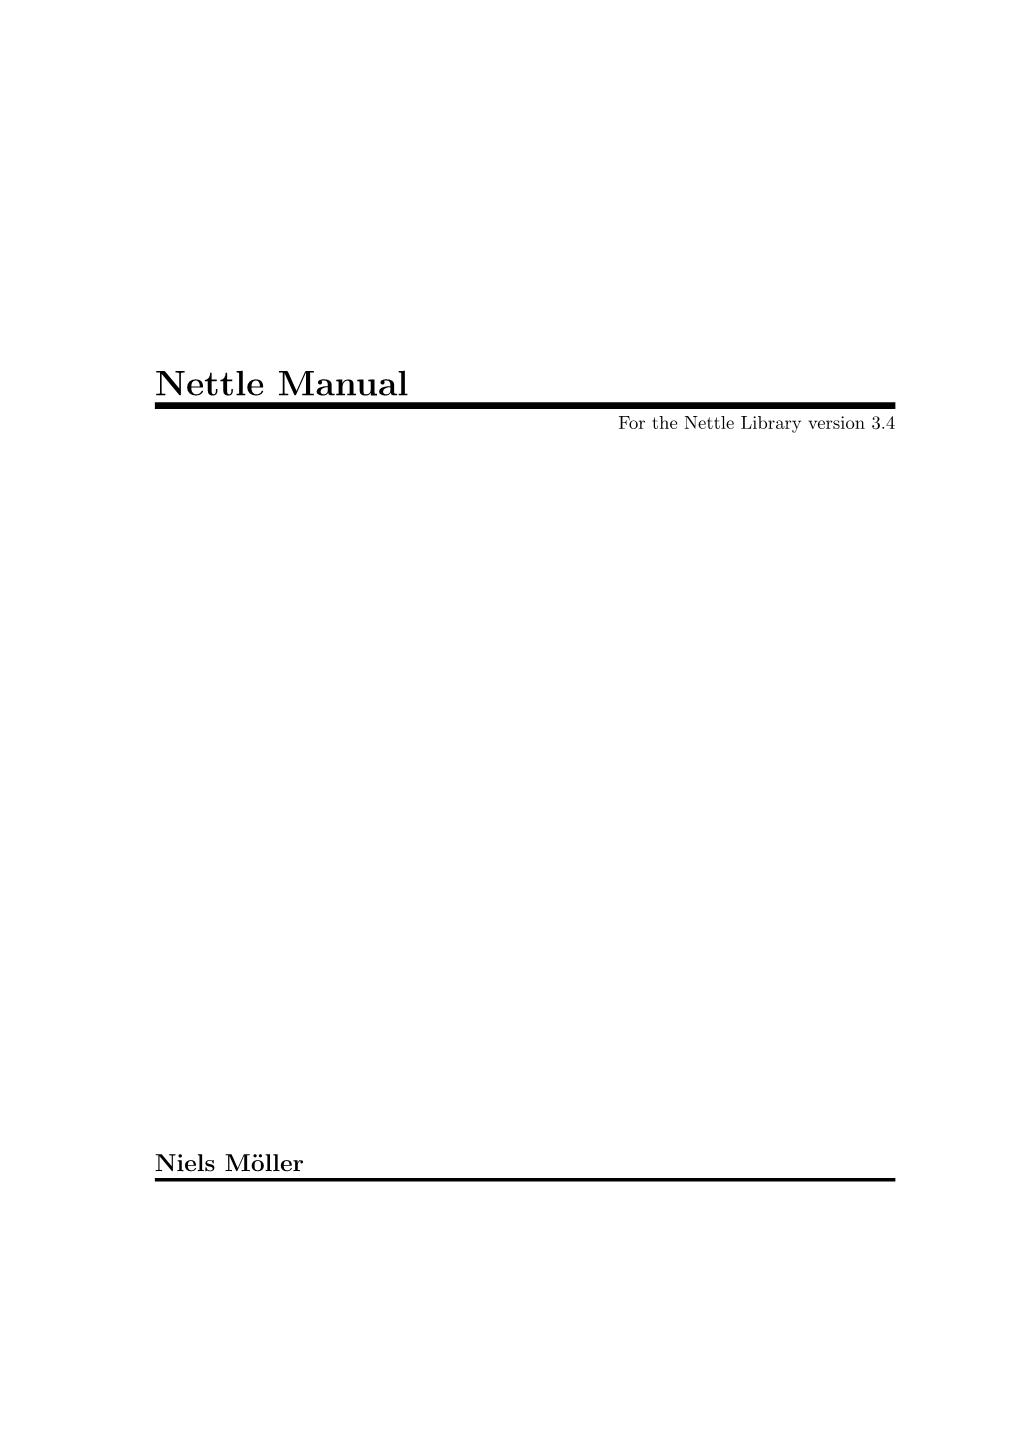 Nettle Manual for the Nettle Library Version 3.4